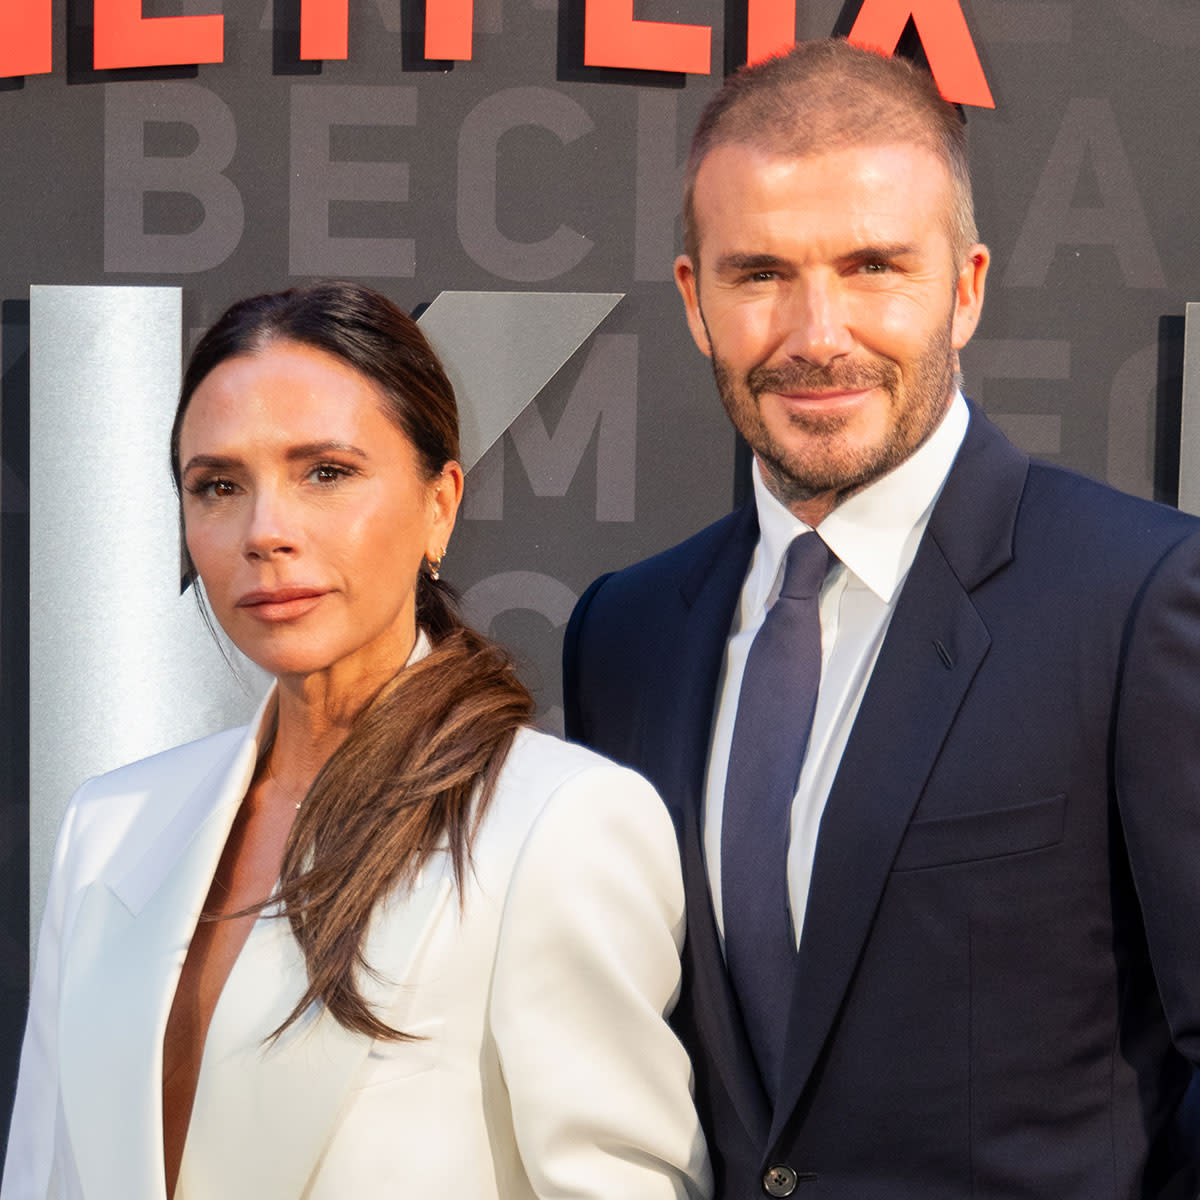 New David Beckham Netflix Docuseries Addresses Rumors Of Him Cheating ...